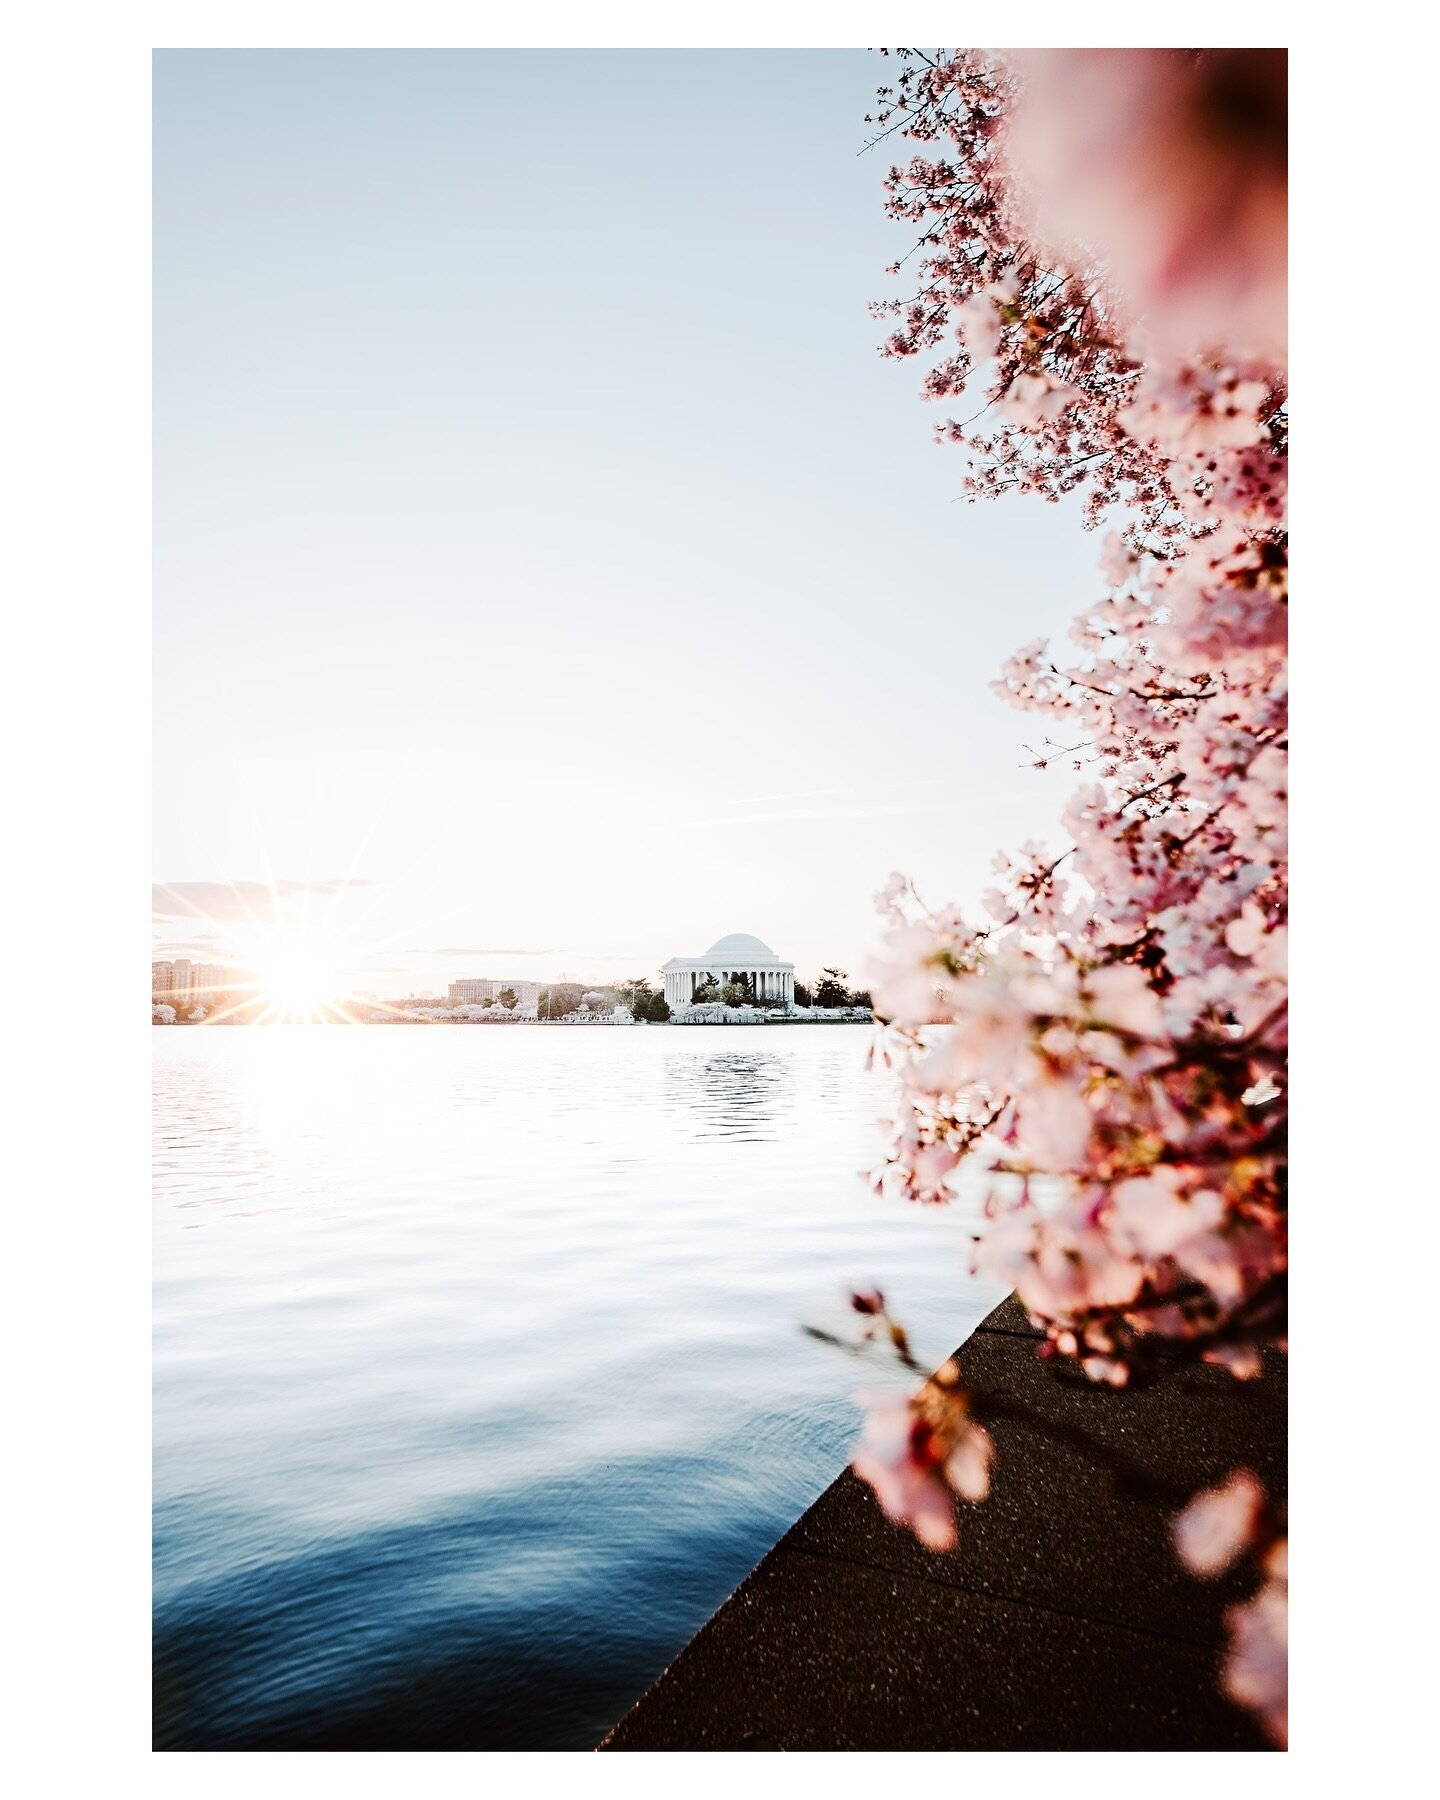 Cherry Blossom season 🌸🏛️🌸 Sunrise at the Tidal Basin with @igdc
&bull;
#jshadowphoto #washingtondc #cherryblossoms